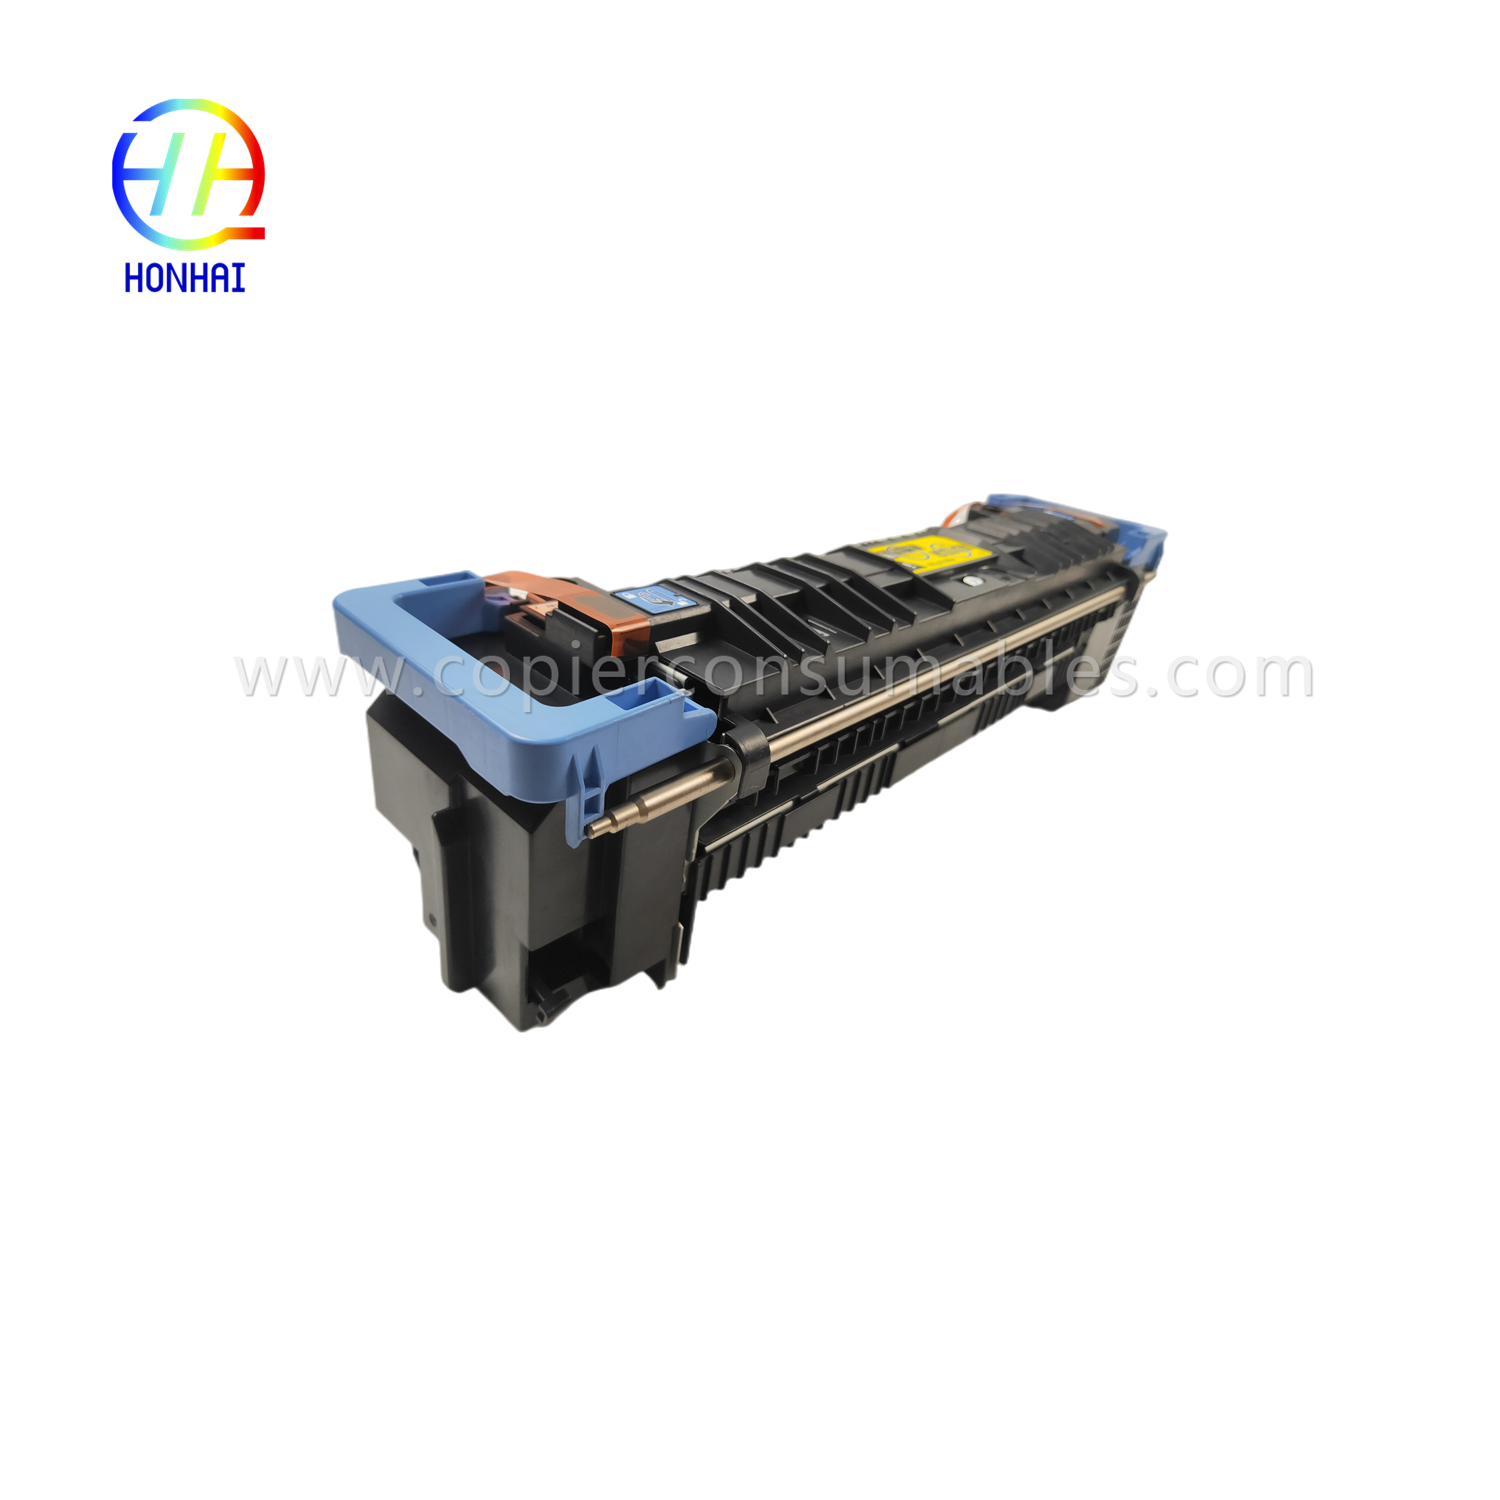 https://c585.goodao.net/fuser-assembly-unit-for-hp-m855-m880-m855dn-m855xh-m880z-m880z-c1n54-67901-c1n58-67901-fusing-assy-heating-fixing/